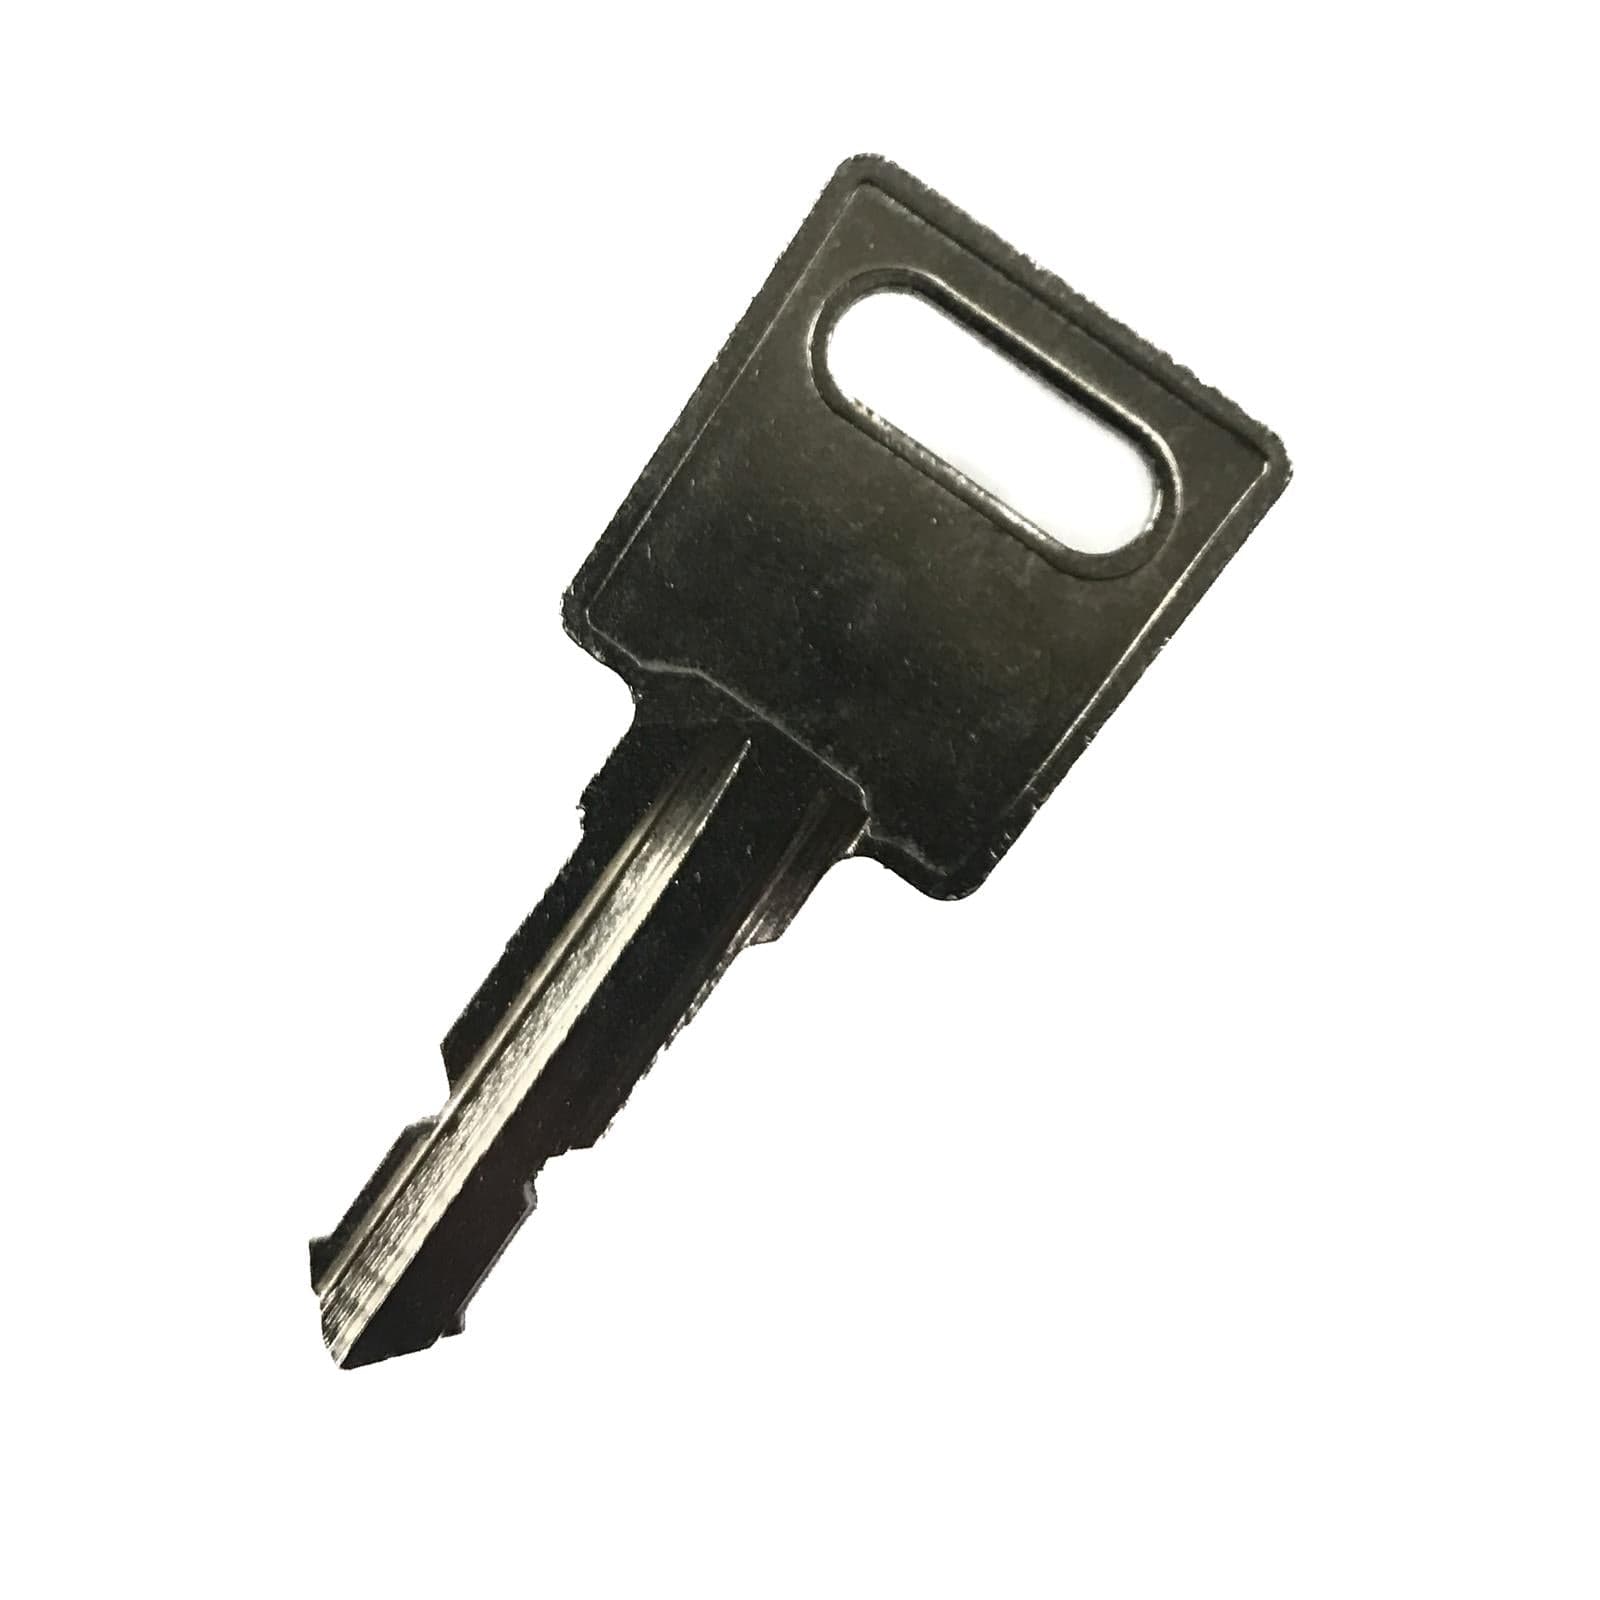 Replacement Window Key FH003 to Suit Everest Window Locks Pre Cut Service Item Thunderfix 902410